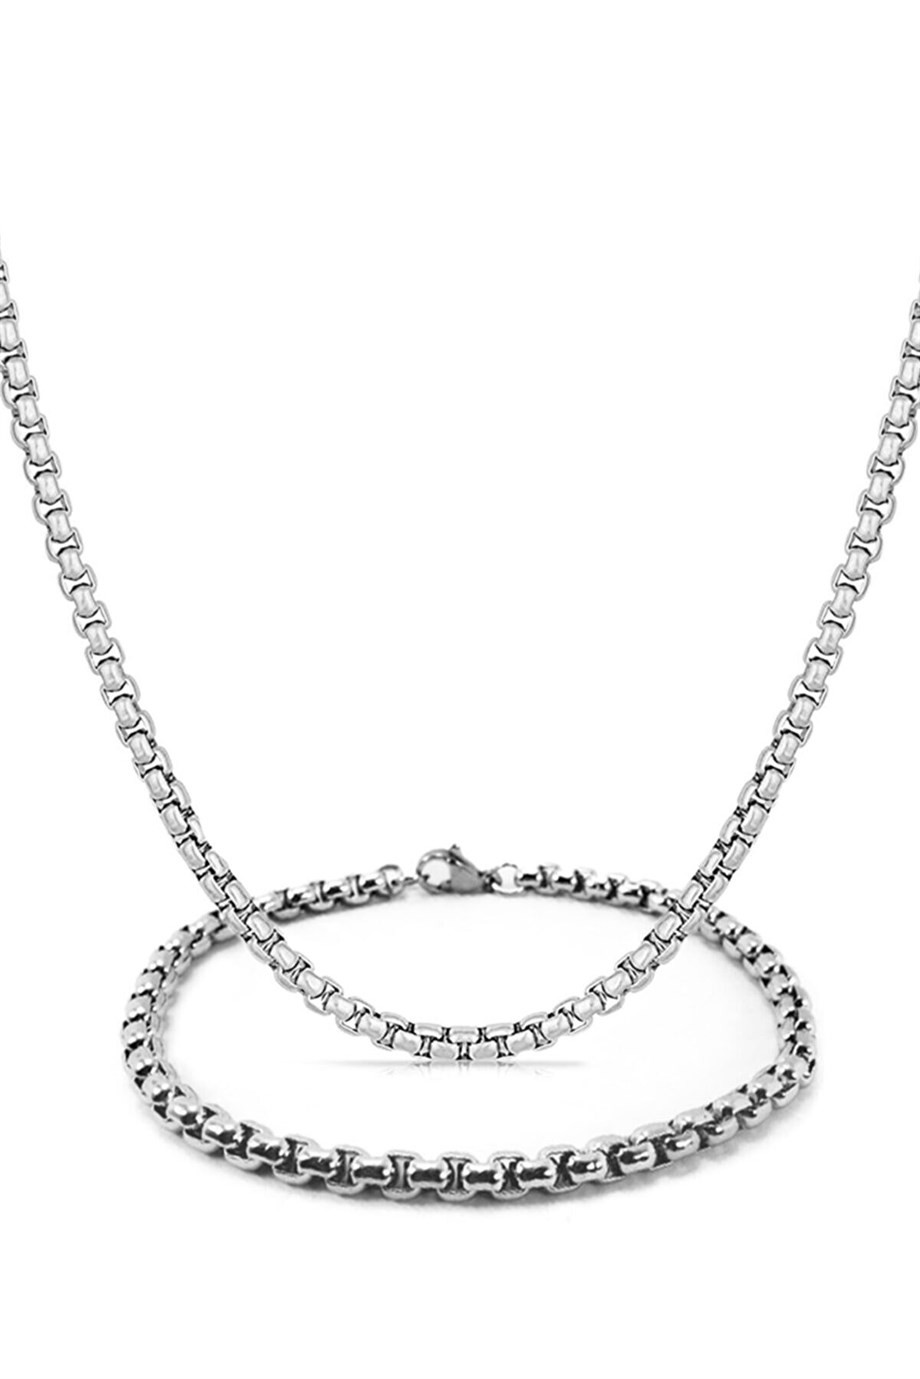 Men's silver color knitting model permeable Albanian chain men's bracelet and necklace chain set